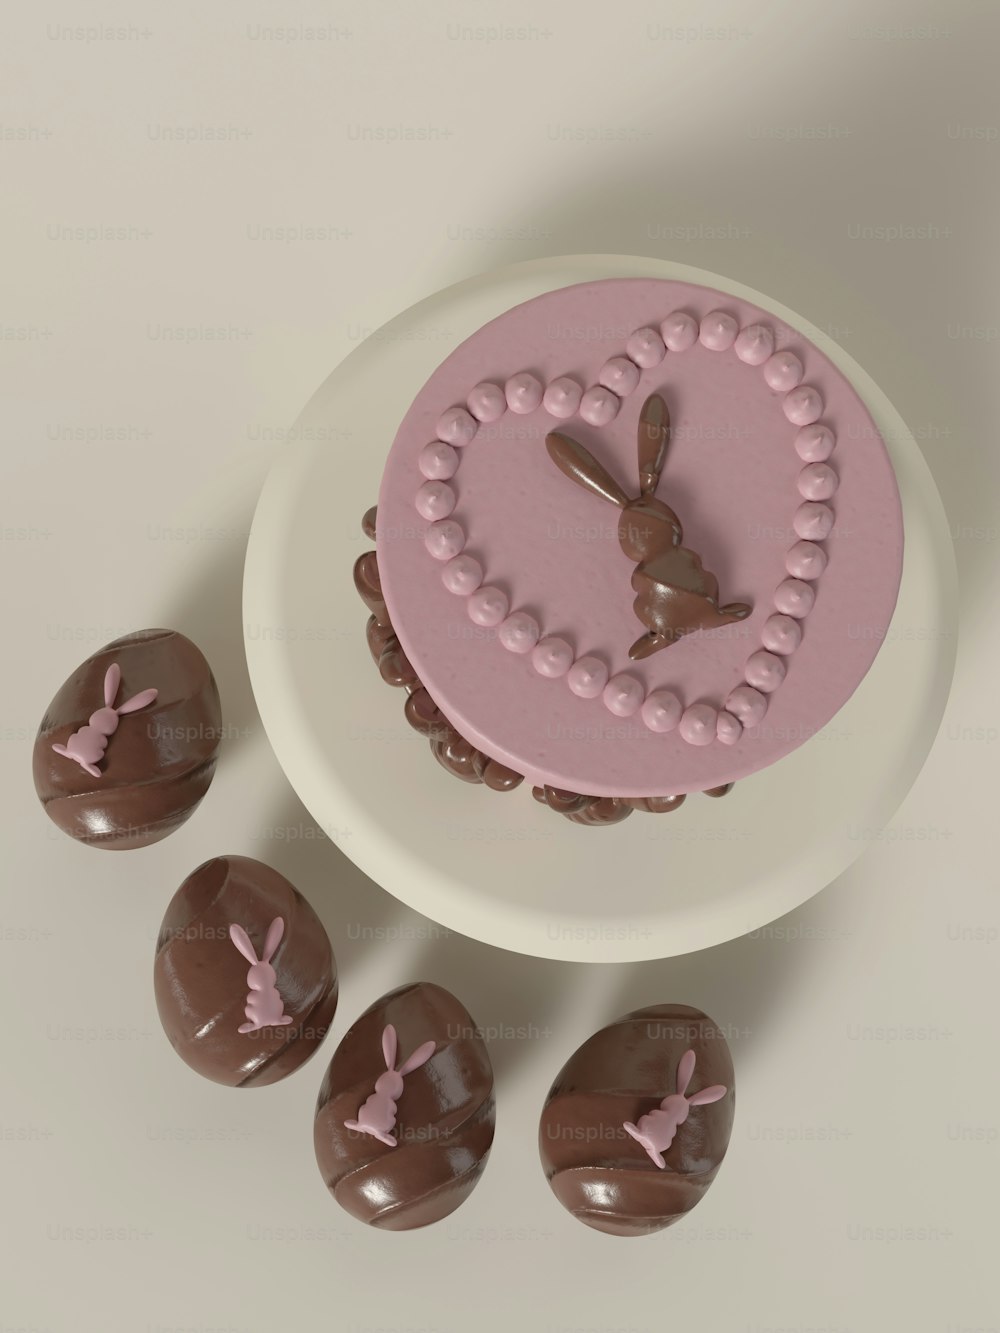 Un pastel rosa con caramelos de chocolate frente a él